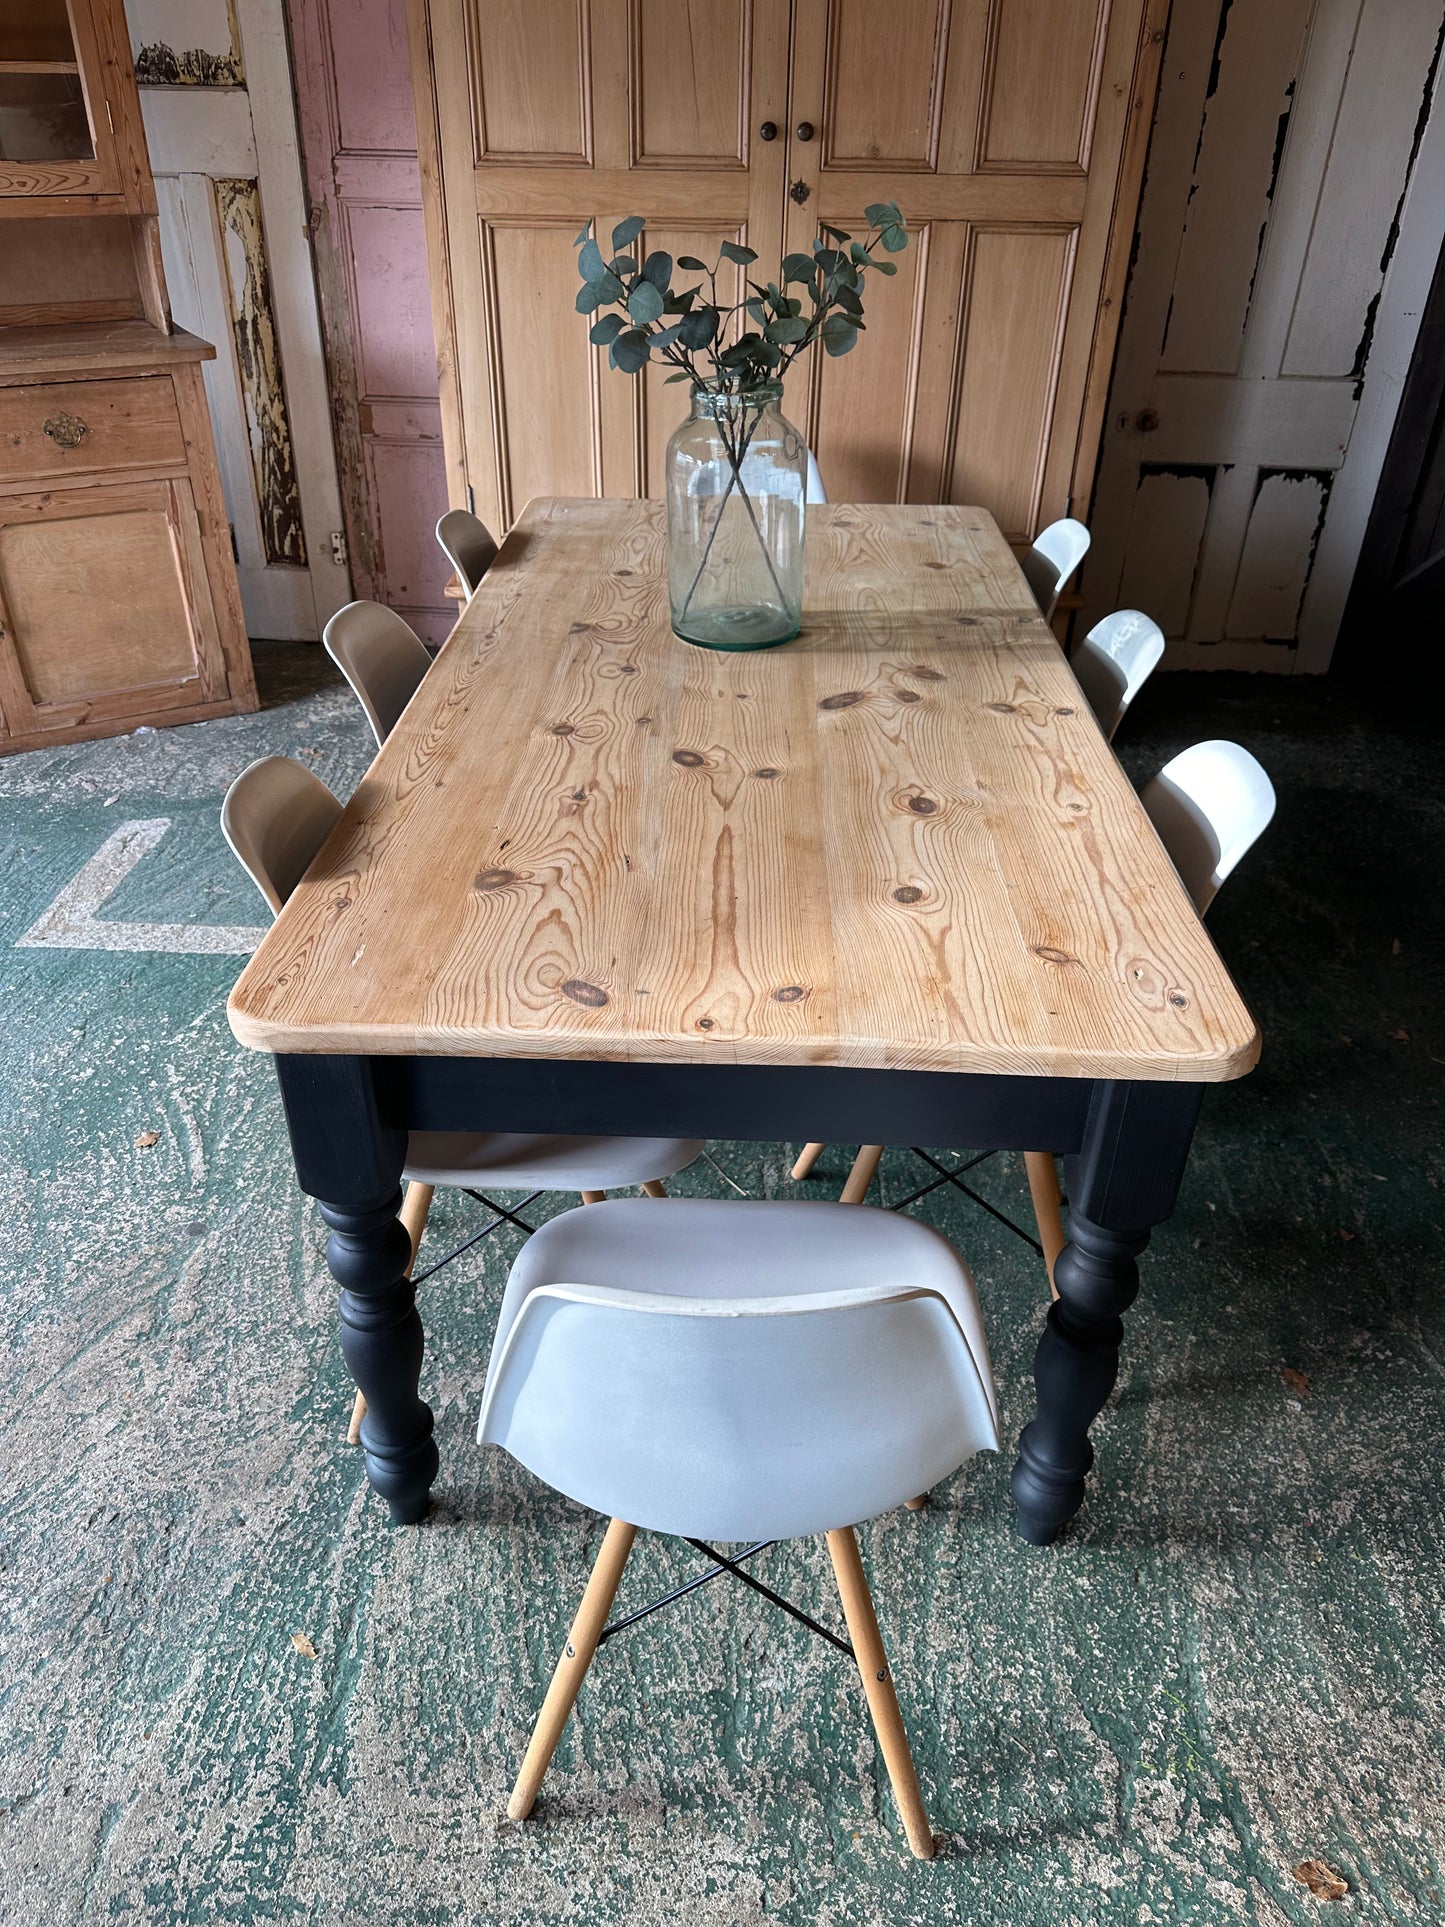 Rustic farmhouse table 8 seater